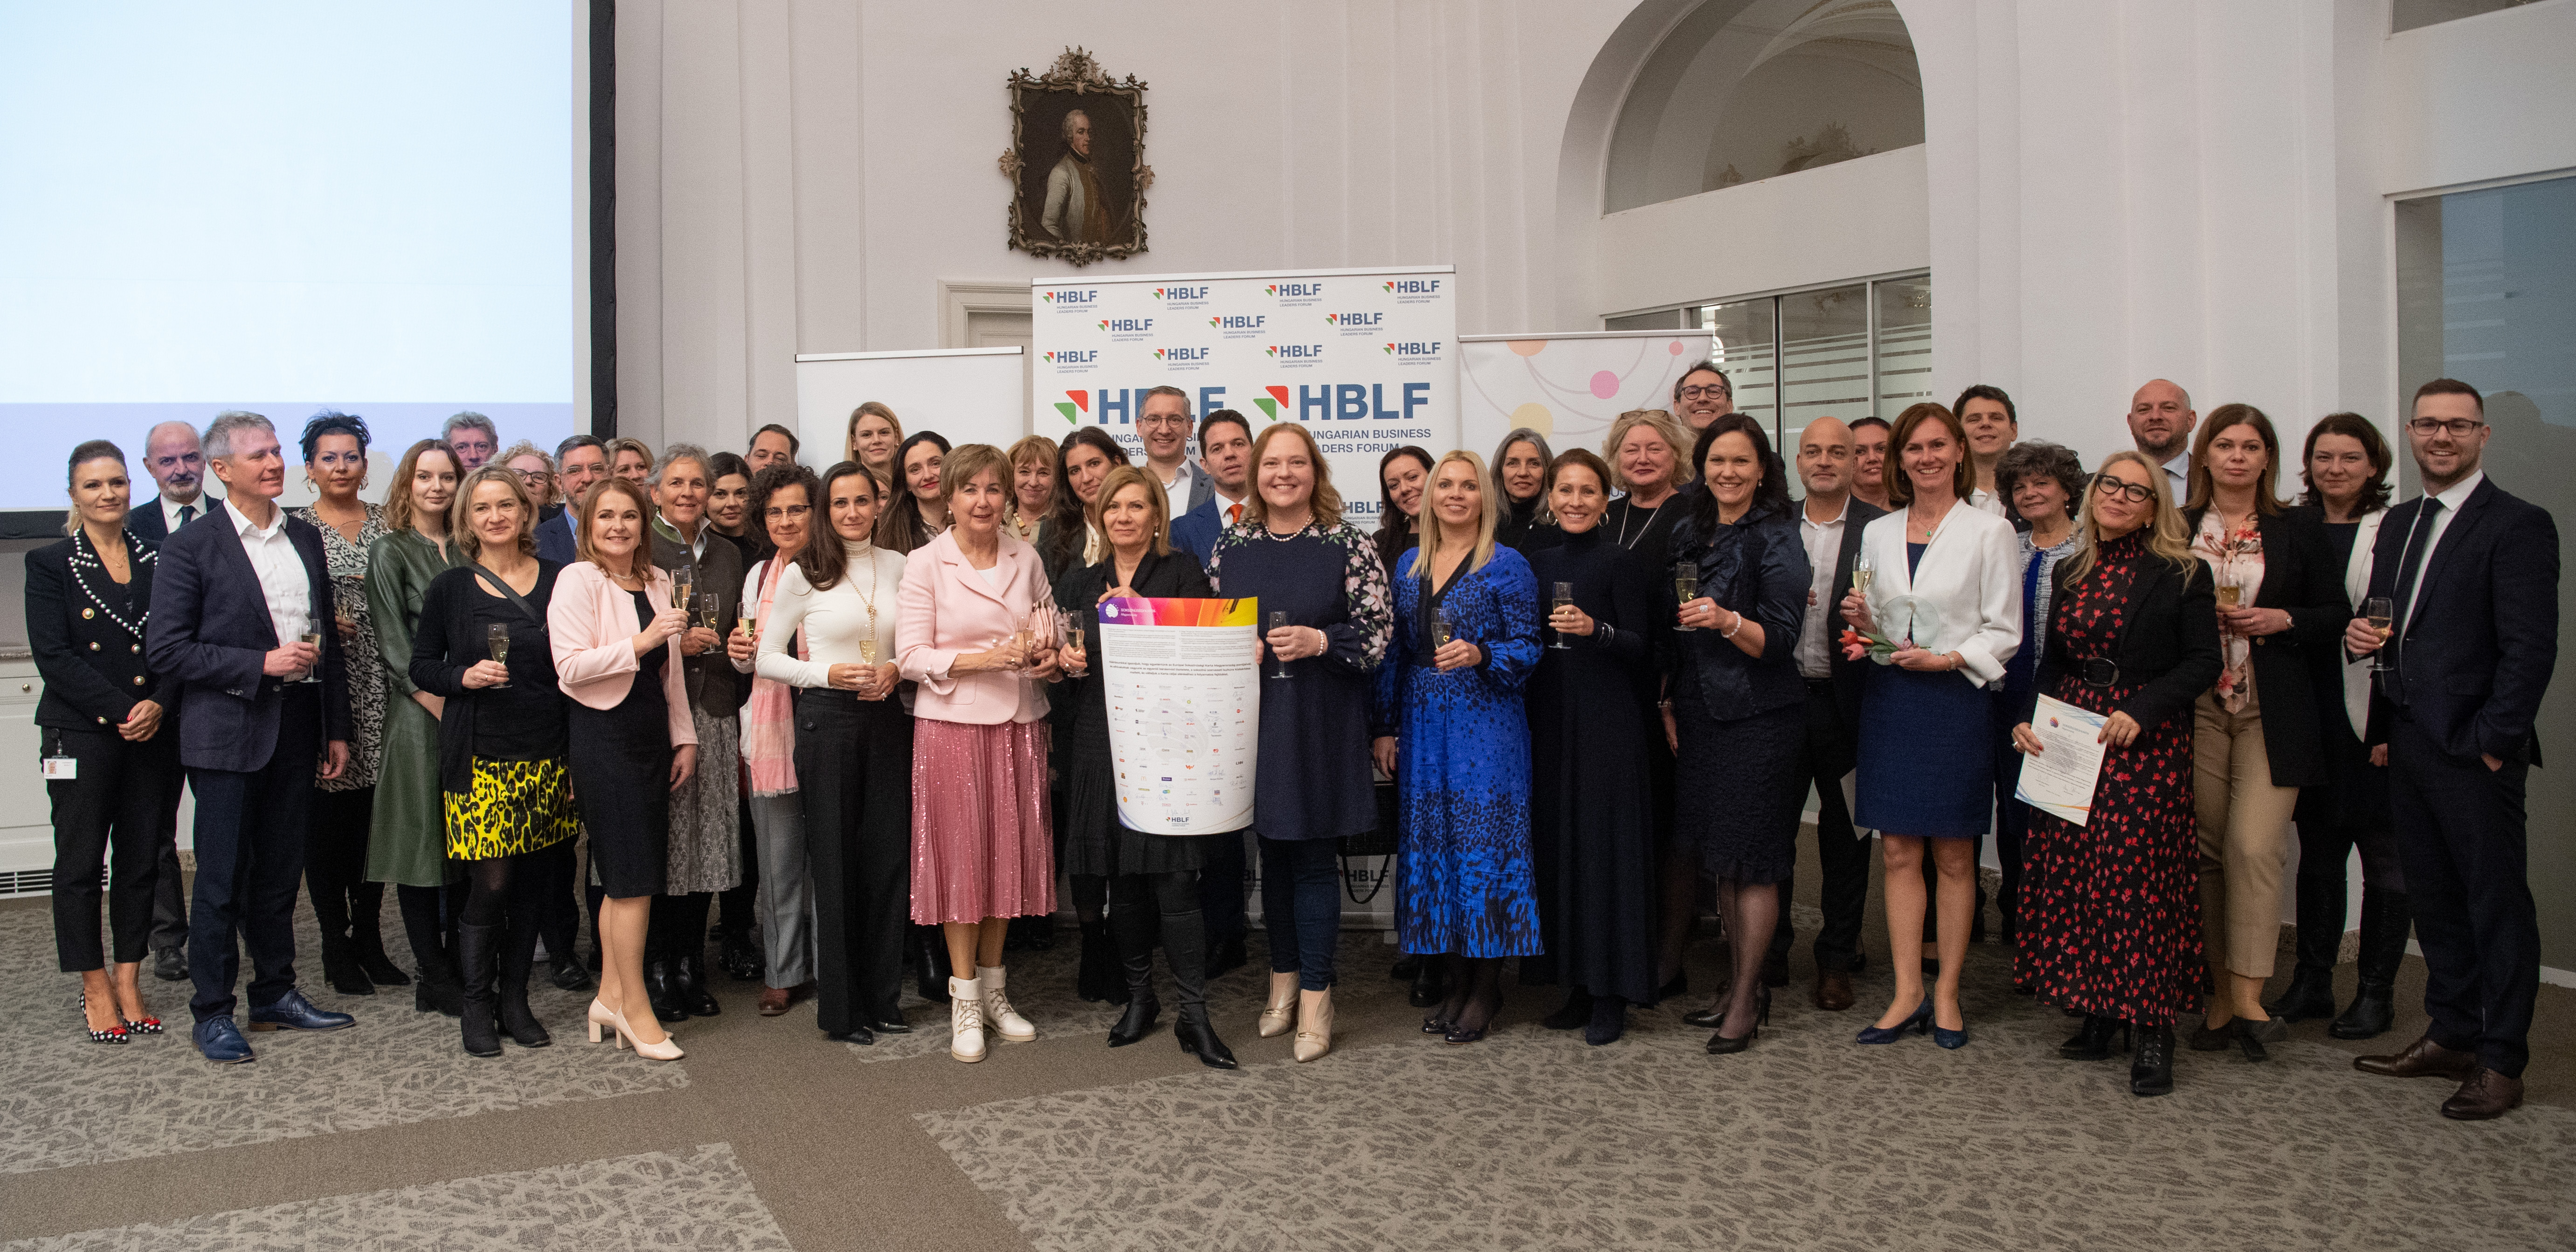 HBLF Diversity Awards Celebrate Inclusive Business Practices